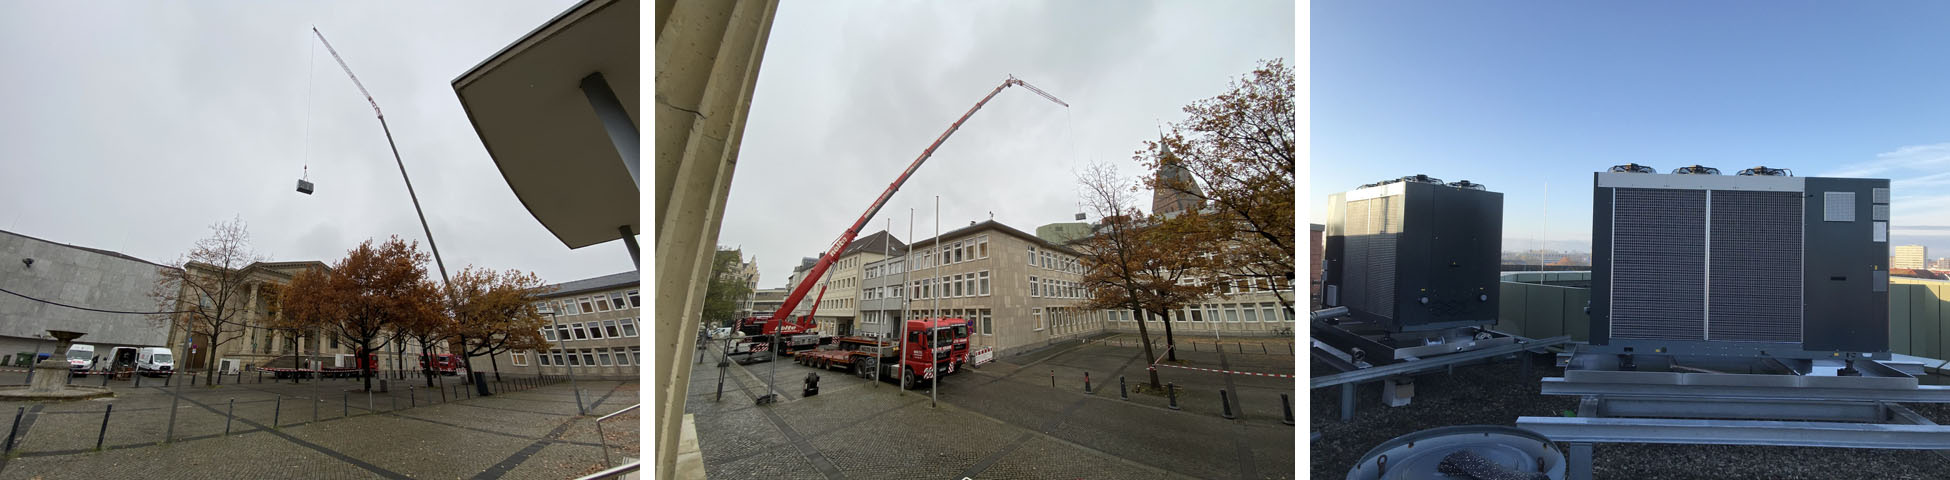 2.500 kg Kältetechnik an 300-t-Kran über den Dächern Hannovers